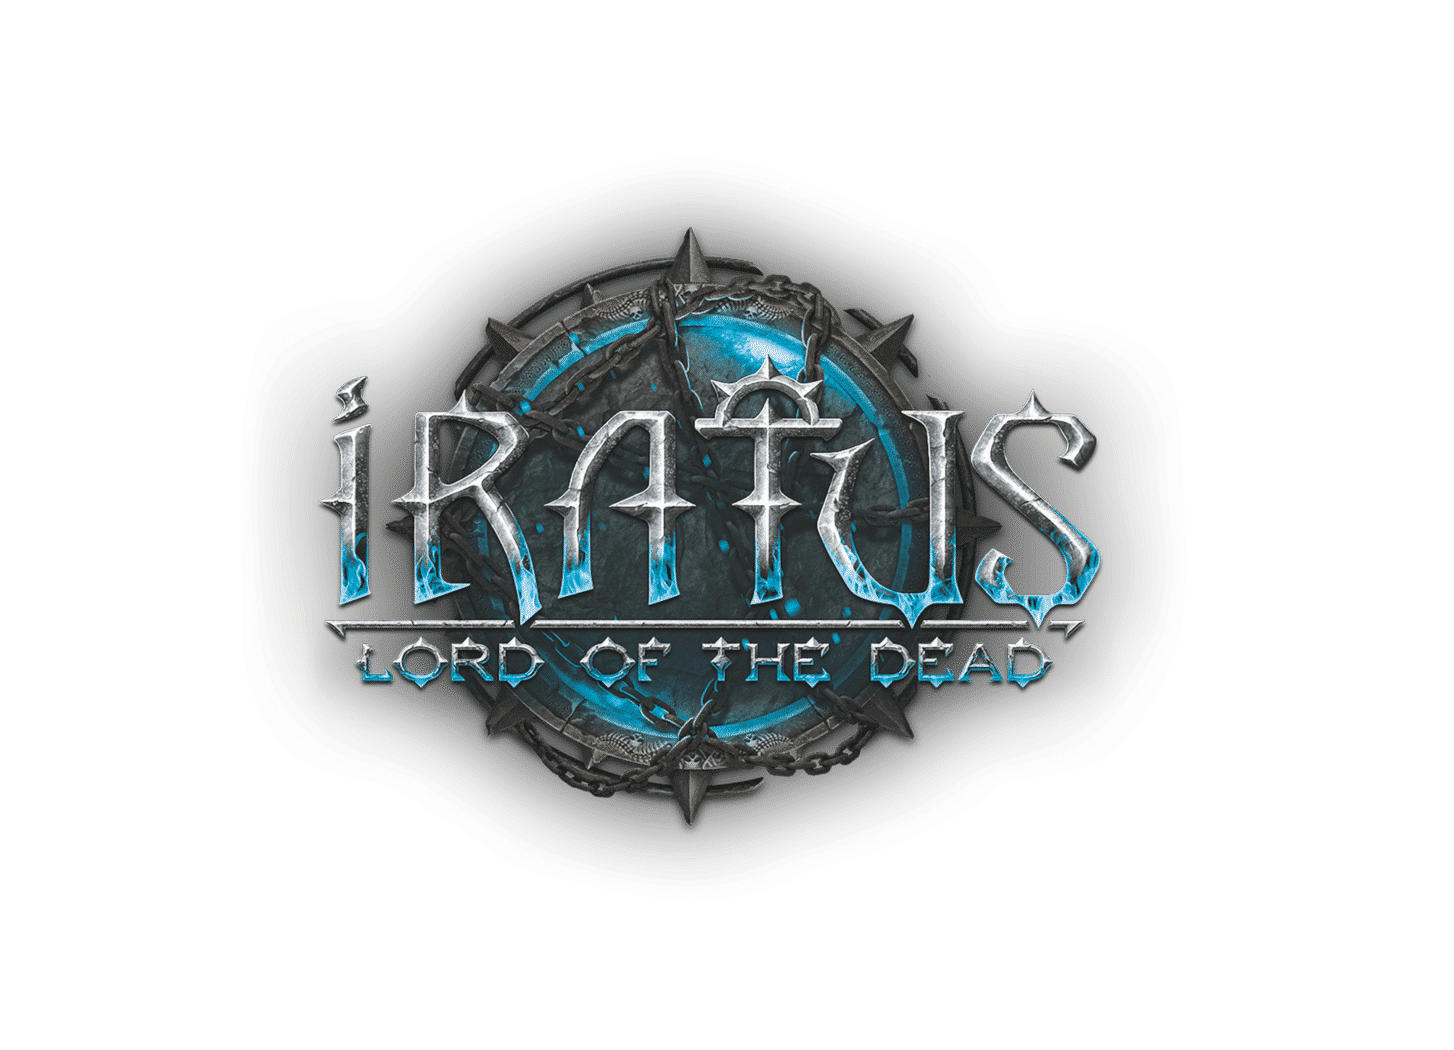 Iratus: Lord of the Dead Logo